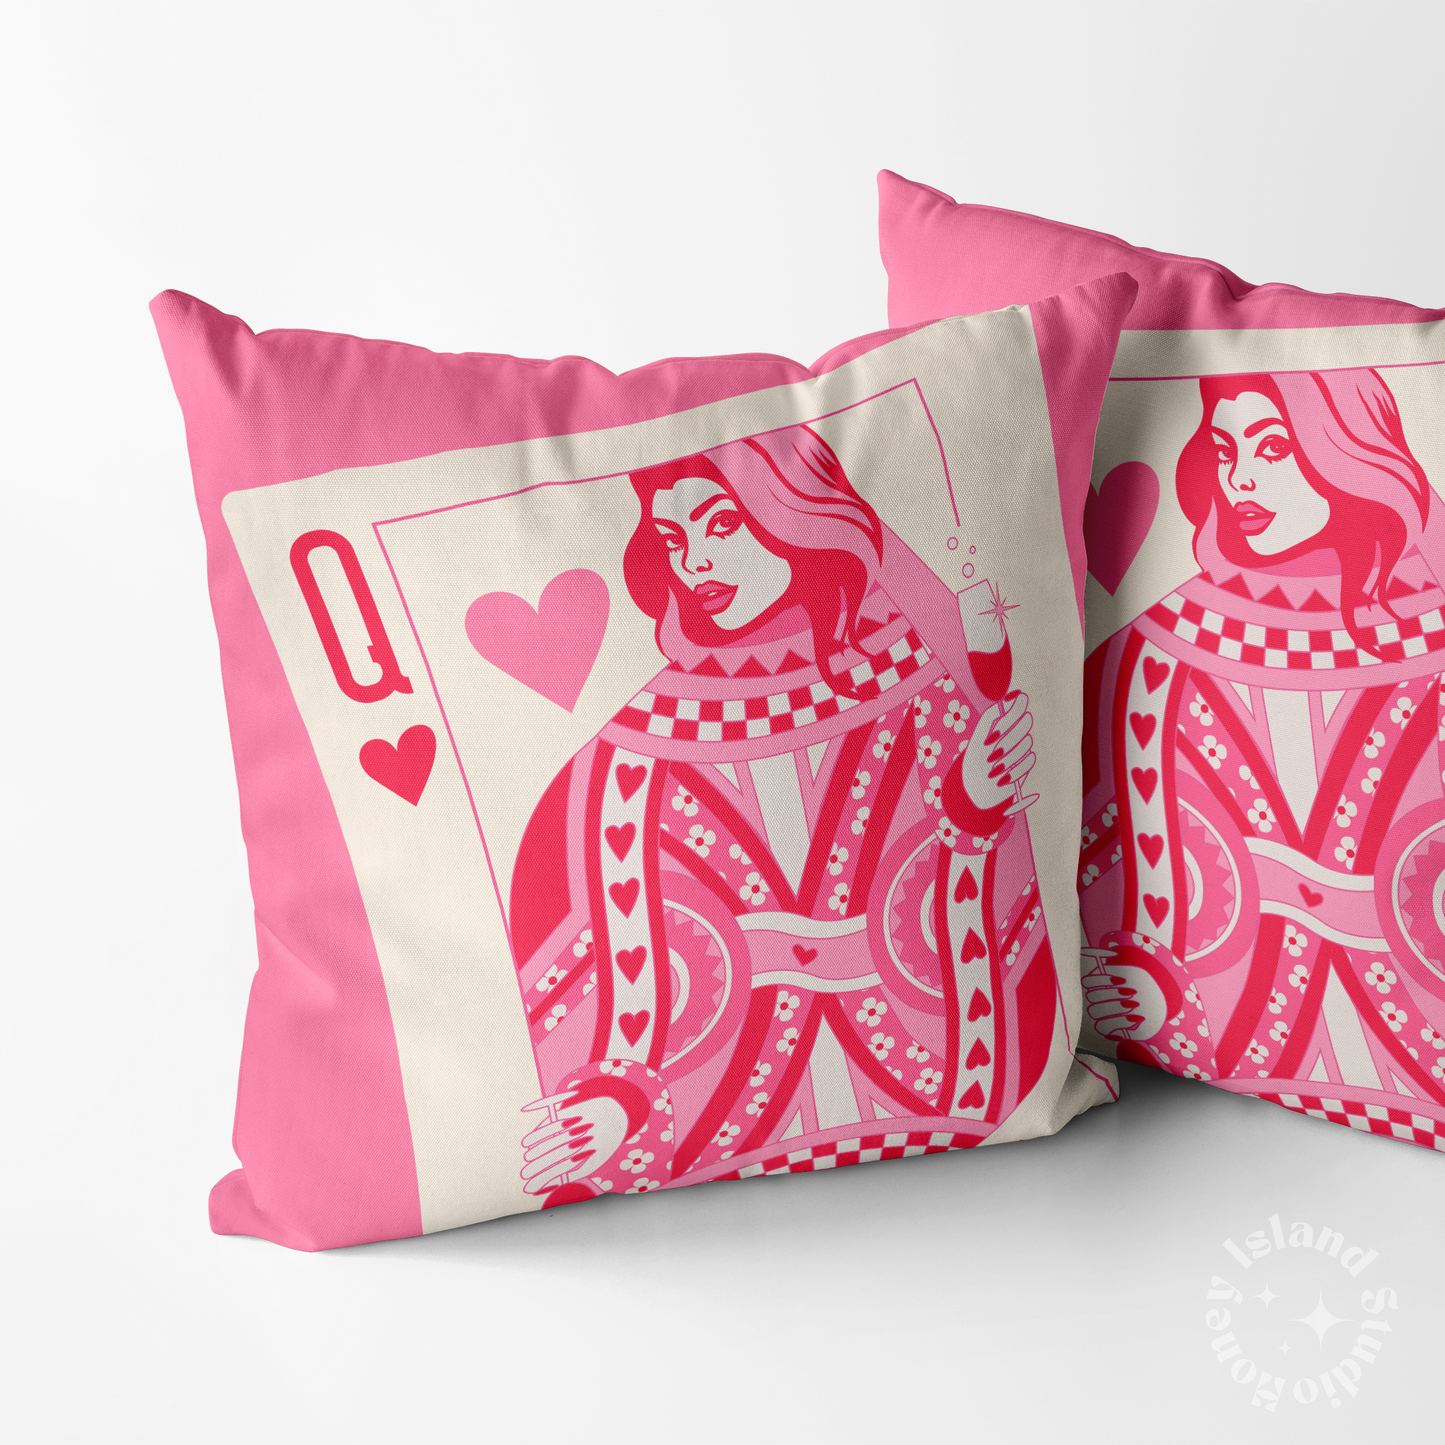 Queen Of Hearts Throw Pillow - Pink/Cream